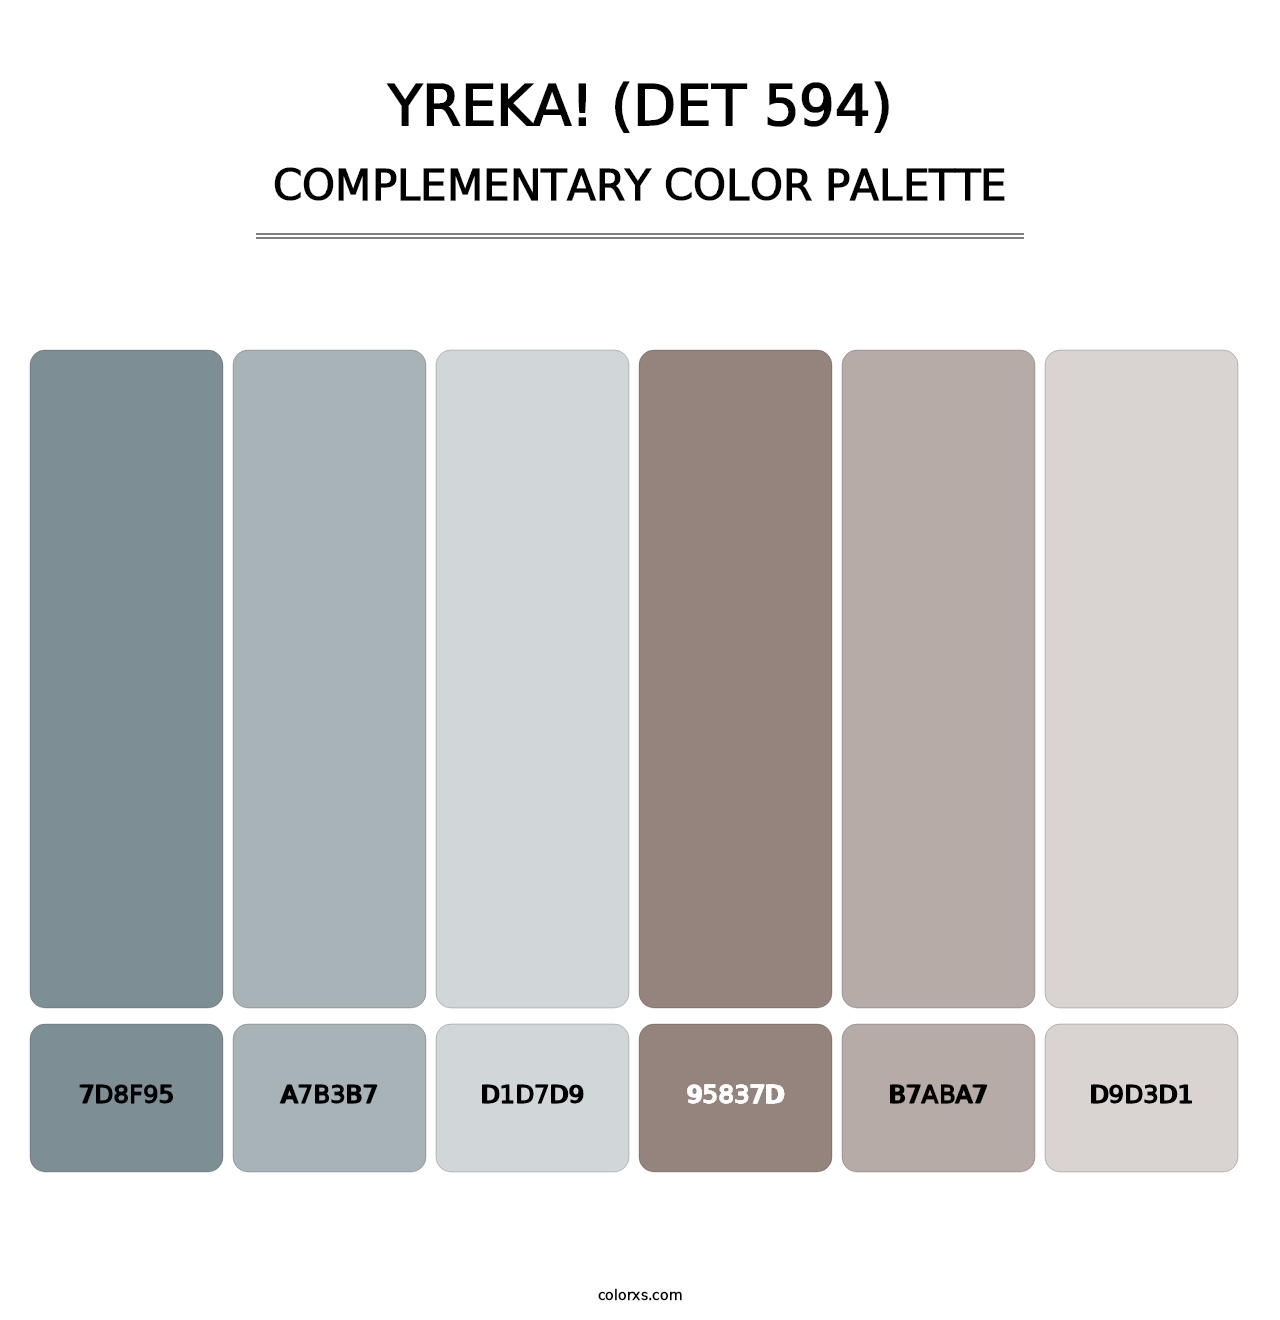 Yreka! (DET 594) - Complementary Color Palette